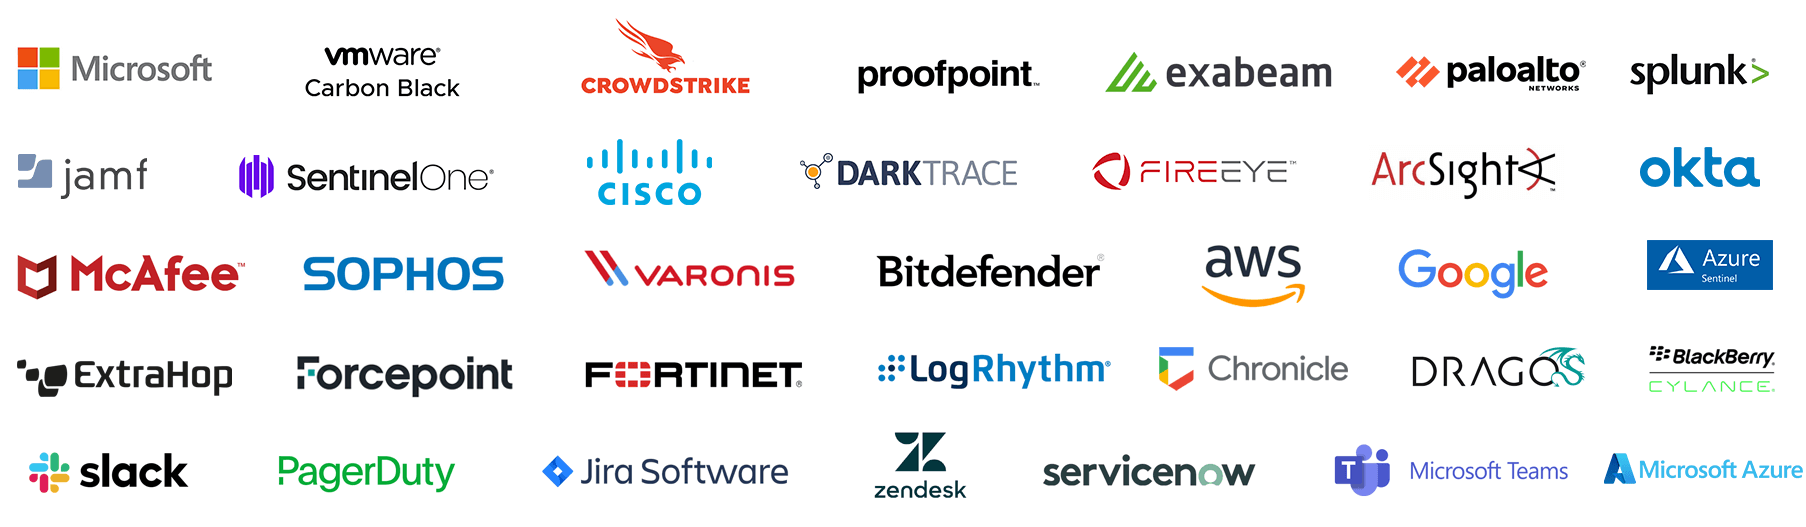 Featured partner logos